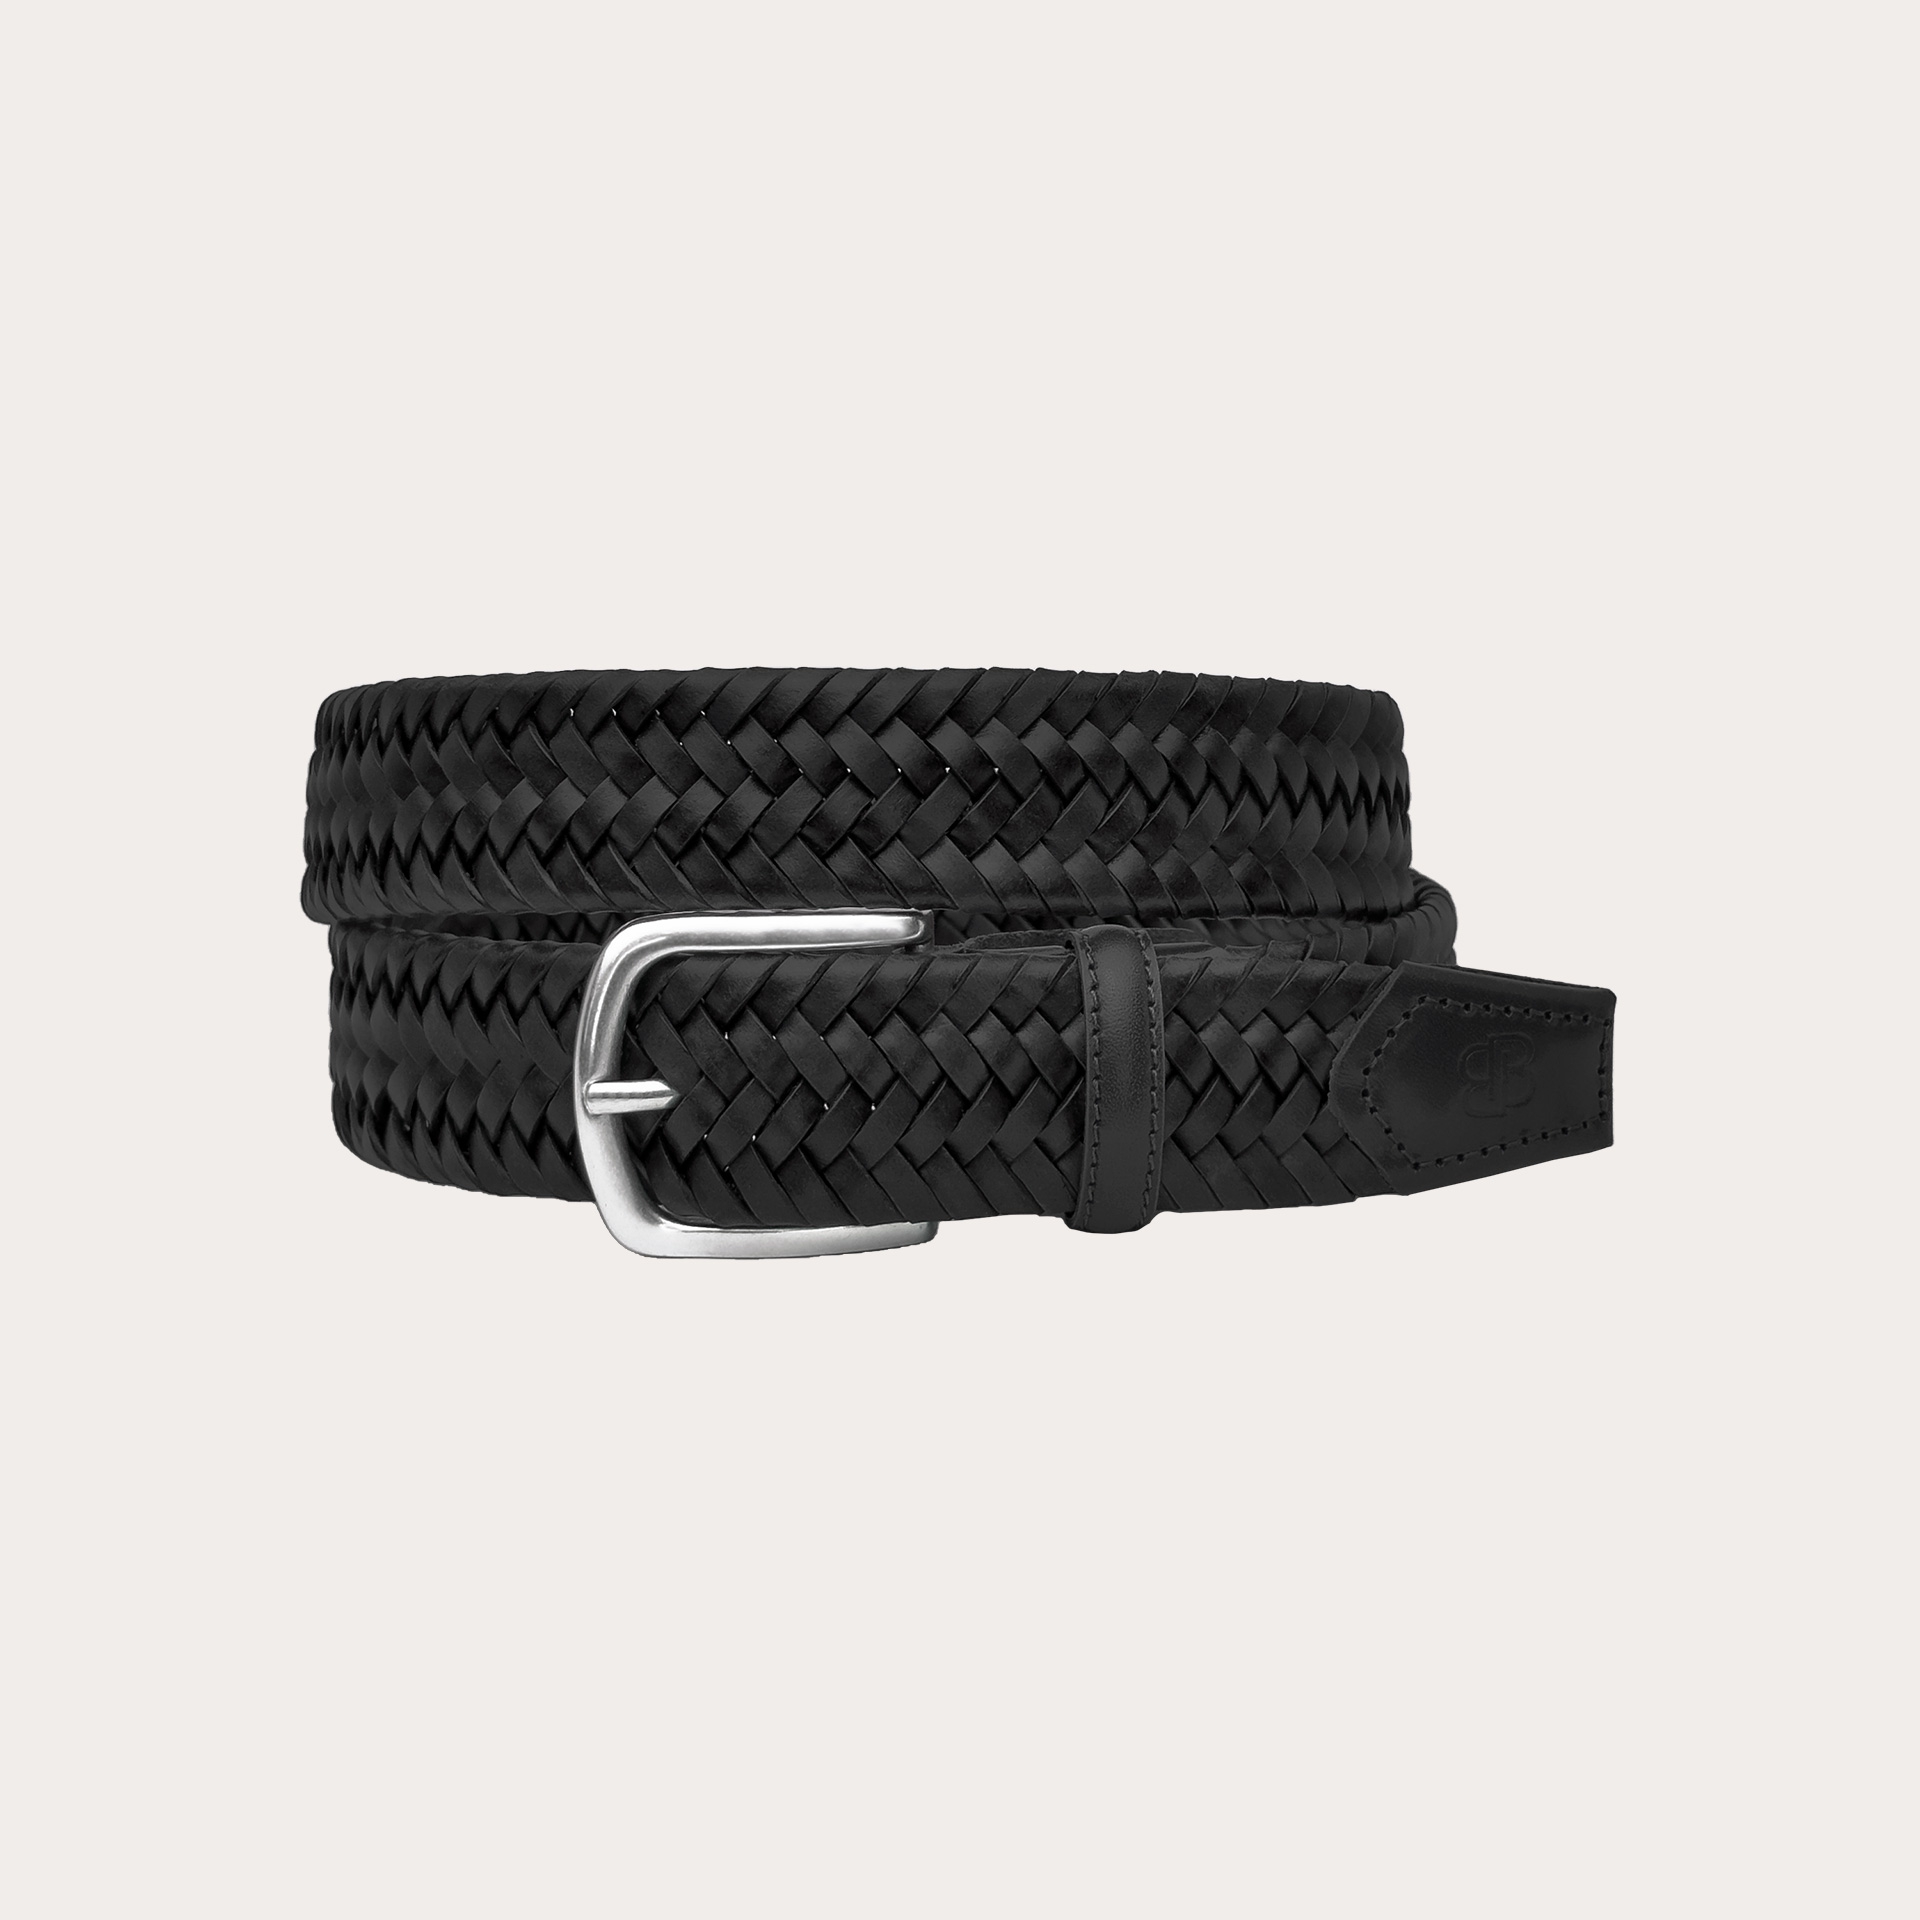 Cintura elastica nera intrecciata in cuoio, nichel free